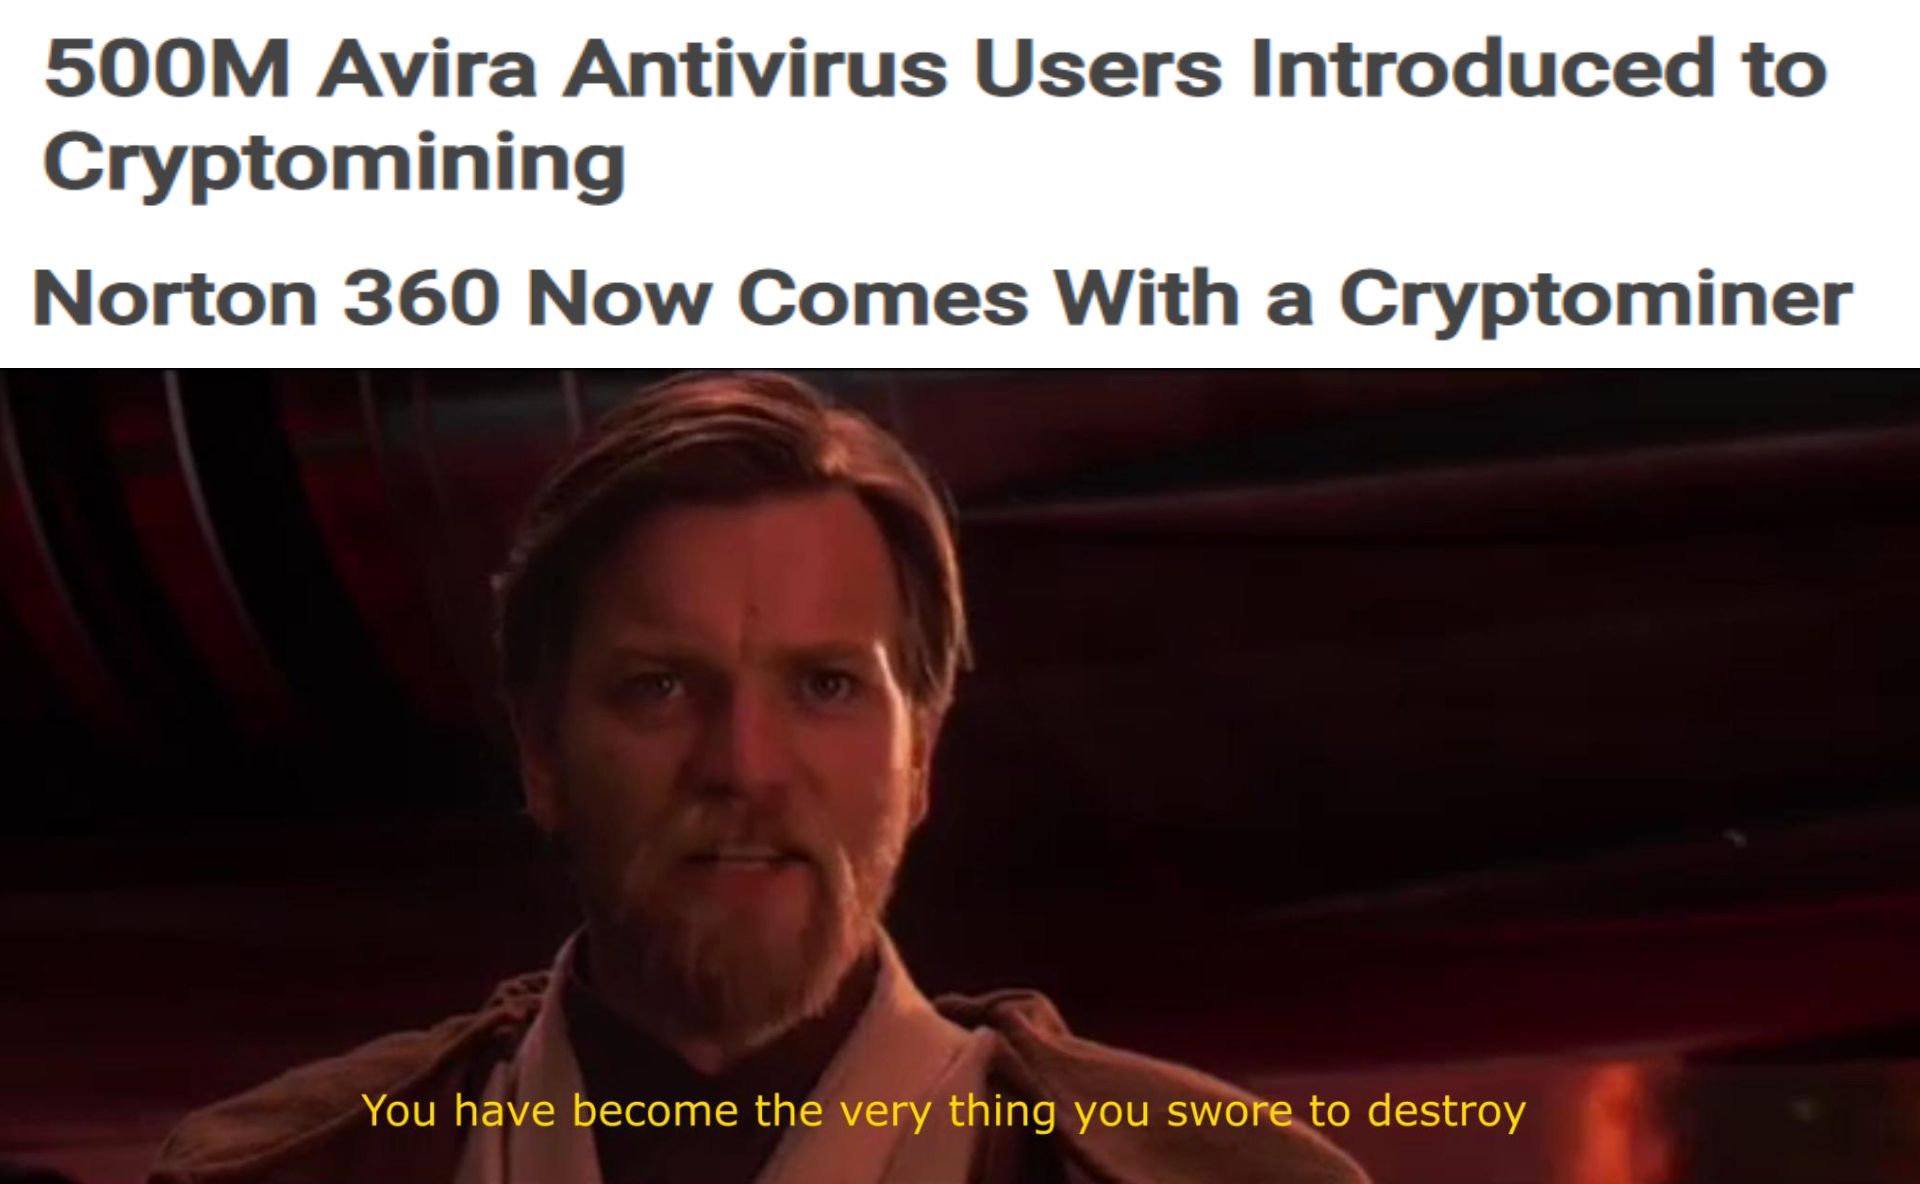 Next up, antiviruses install malware